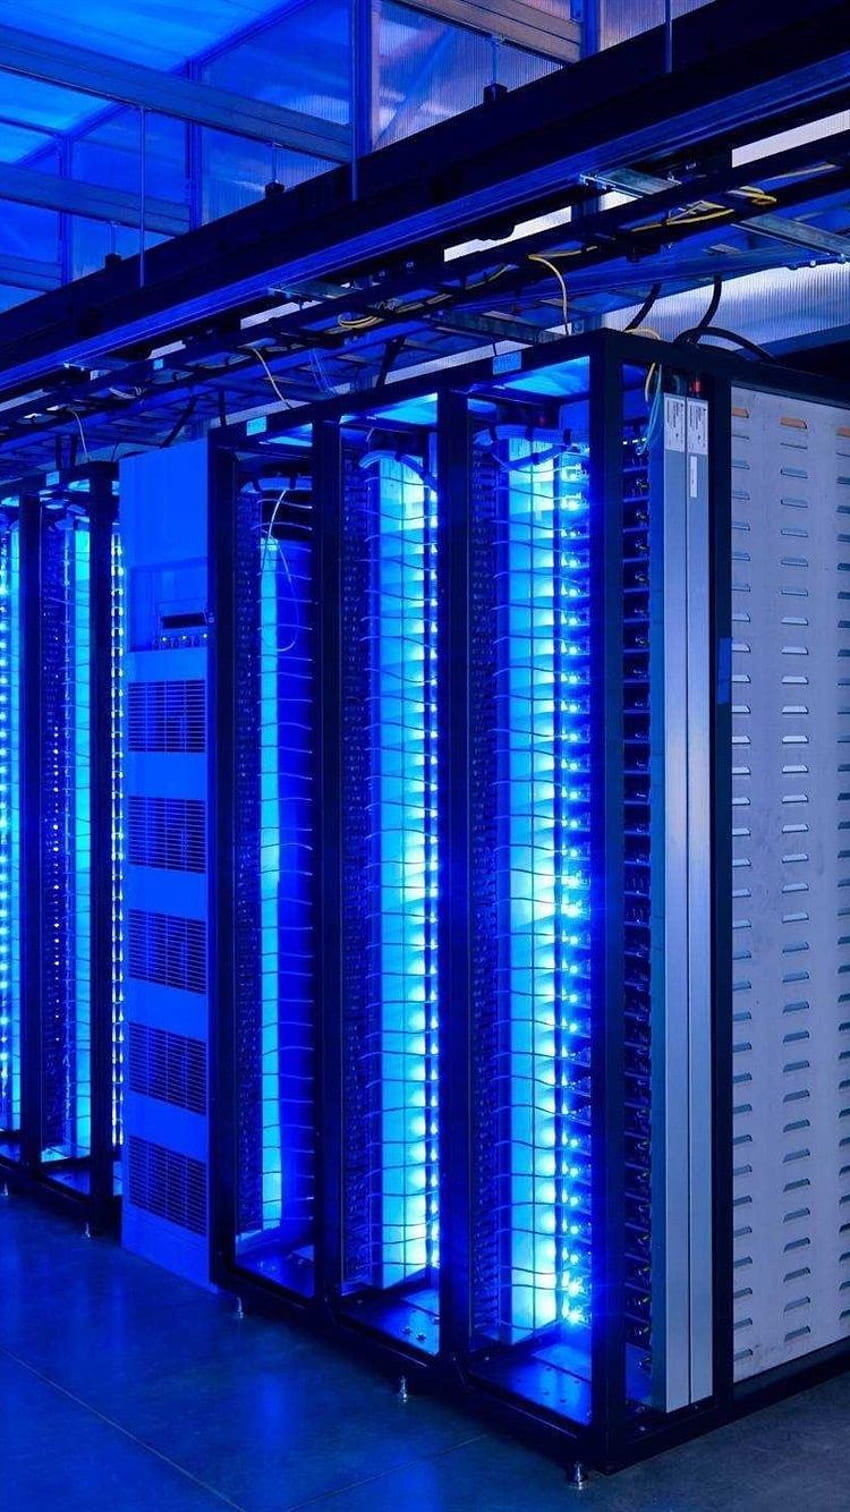 Superkomputer, pusat data, cahaya biru Q wallpaper ponsel HD